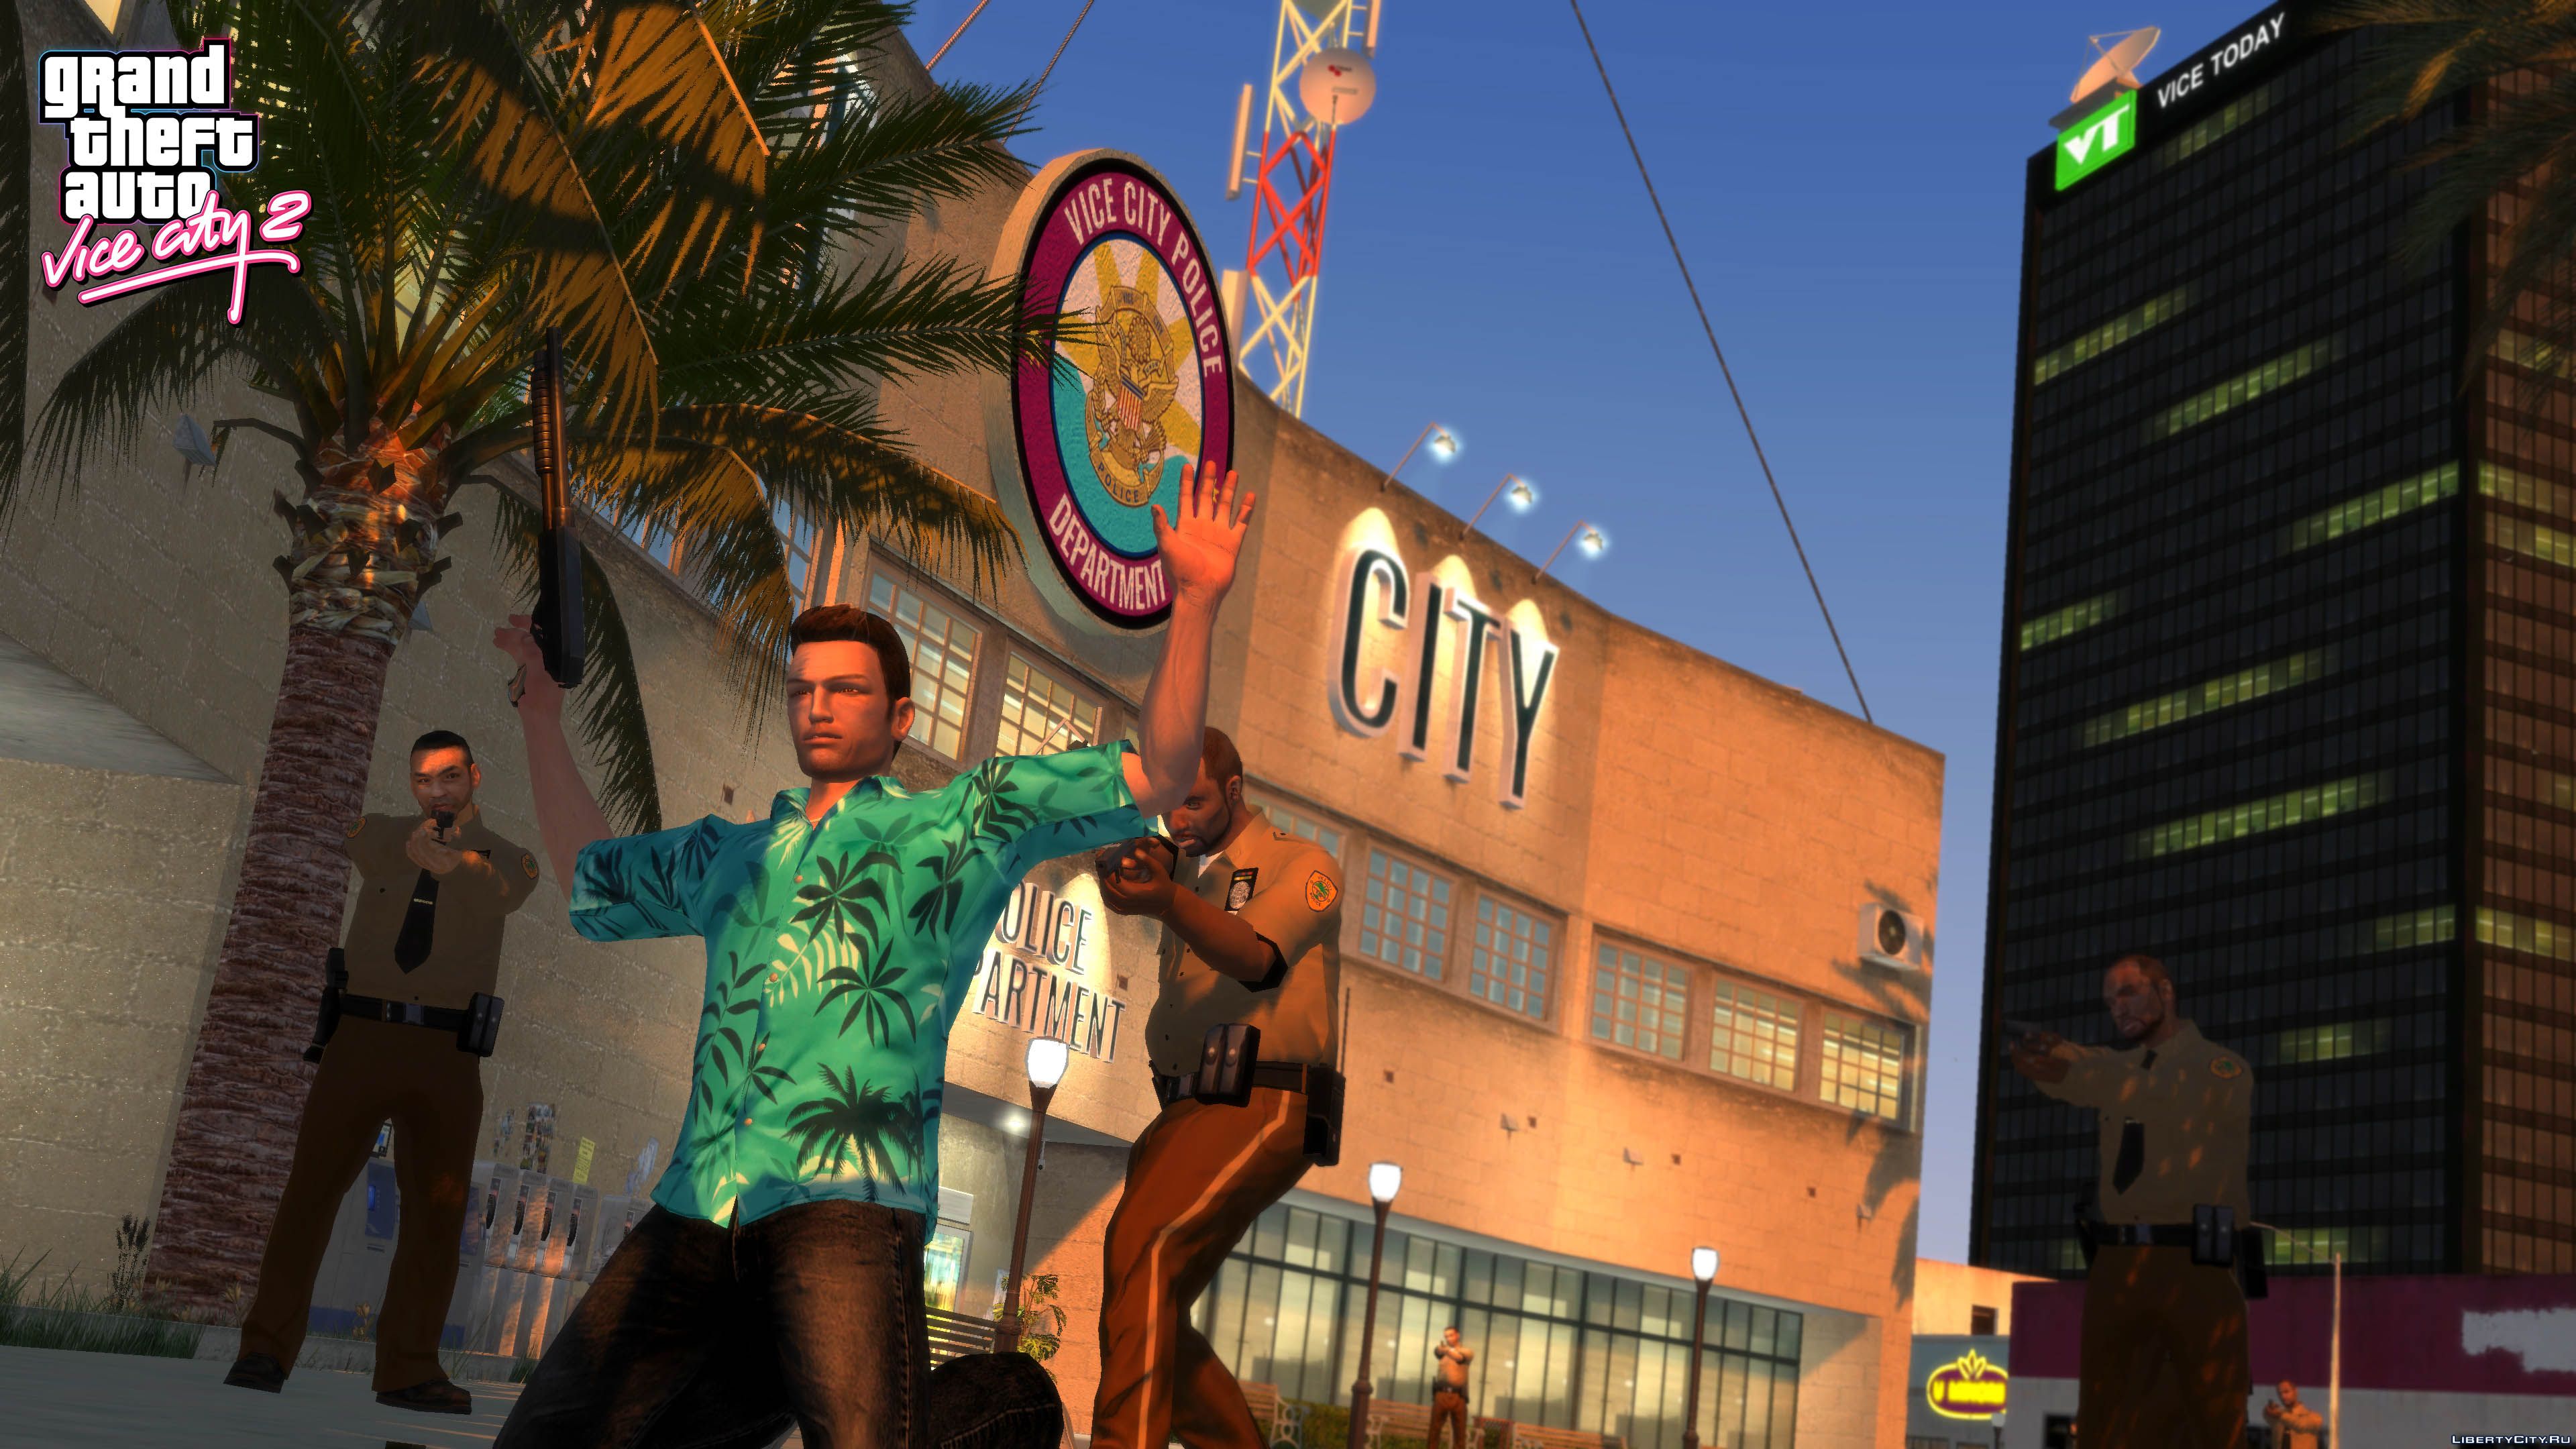 Grand Theft Auto - Vice City Stories (Windows 10 Compatible